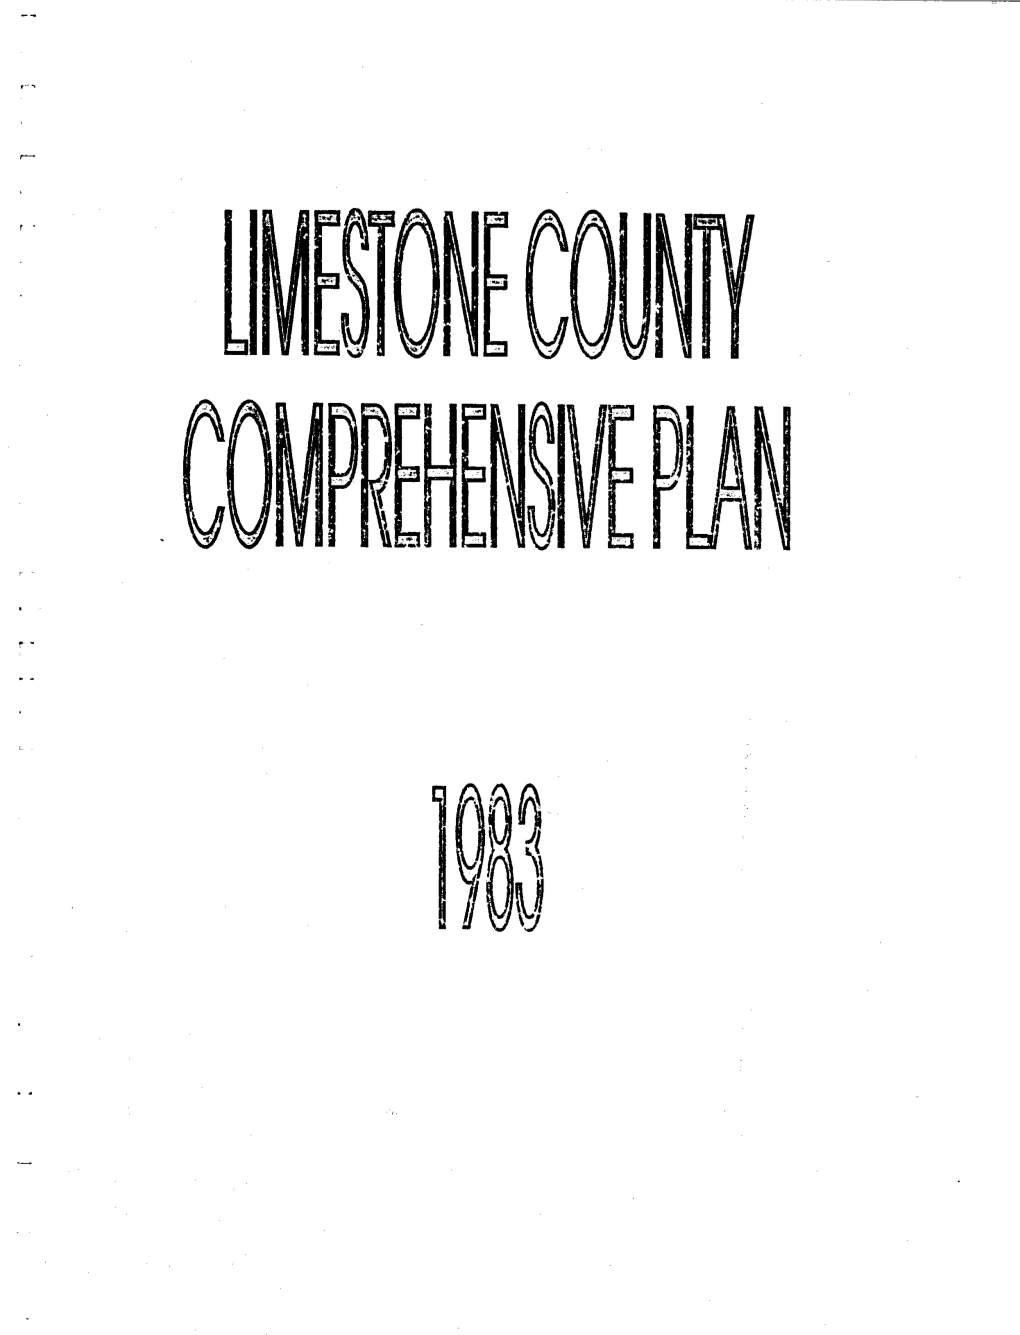 Limestone County, Alabama Comprehensive Plan, 1983